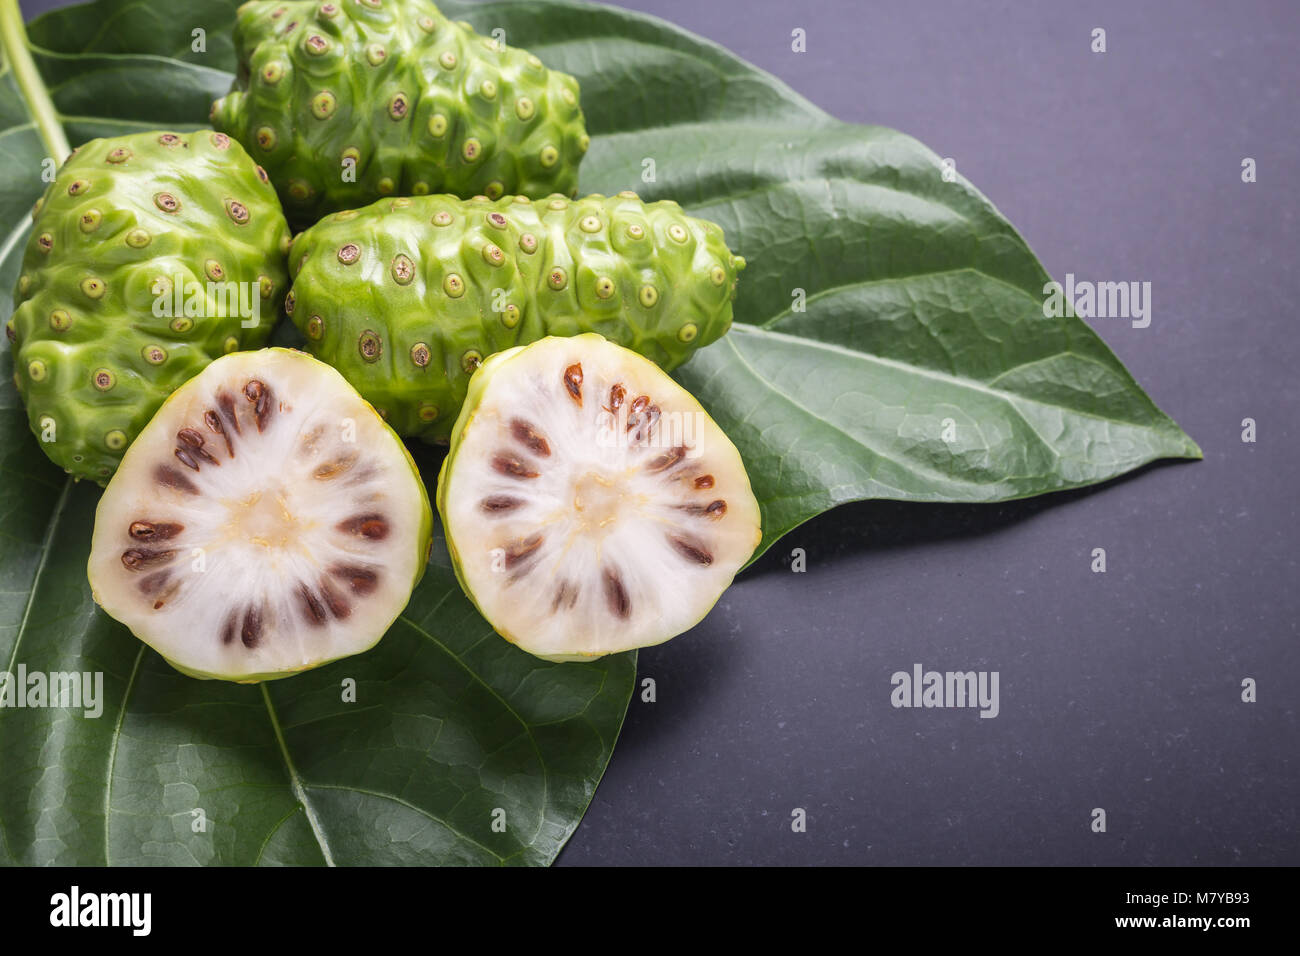 Fruit of Great morinda (Noni) or Morinda citrifolia tree and green leaf on black stone board background Stock Photo